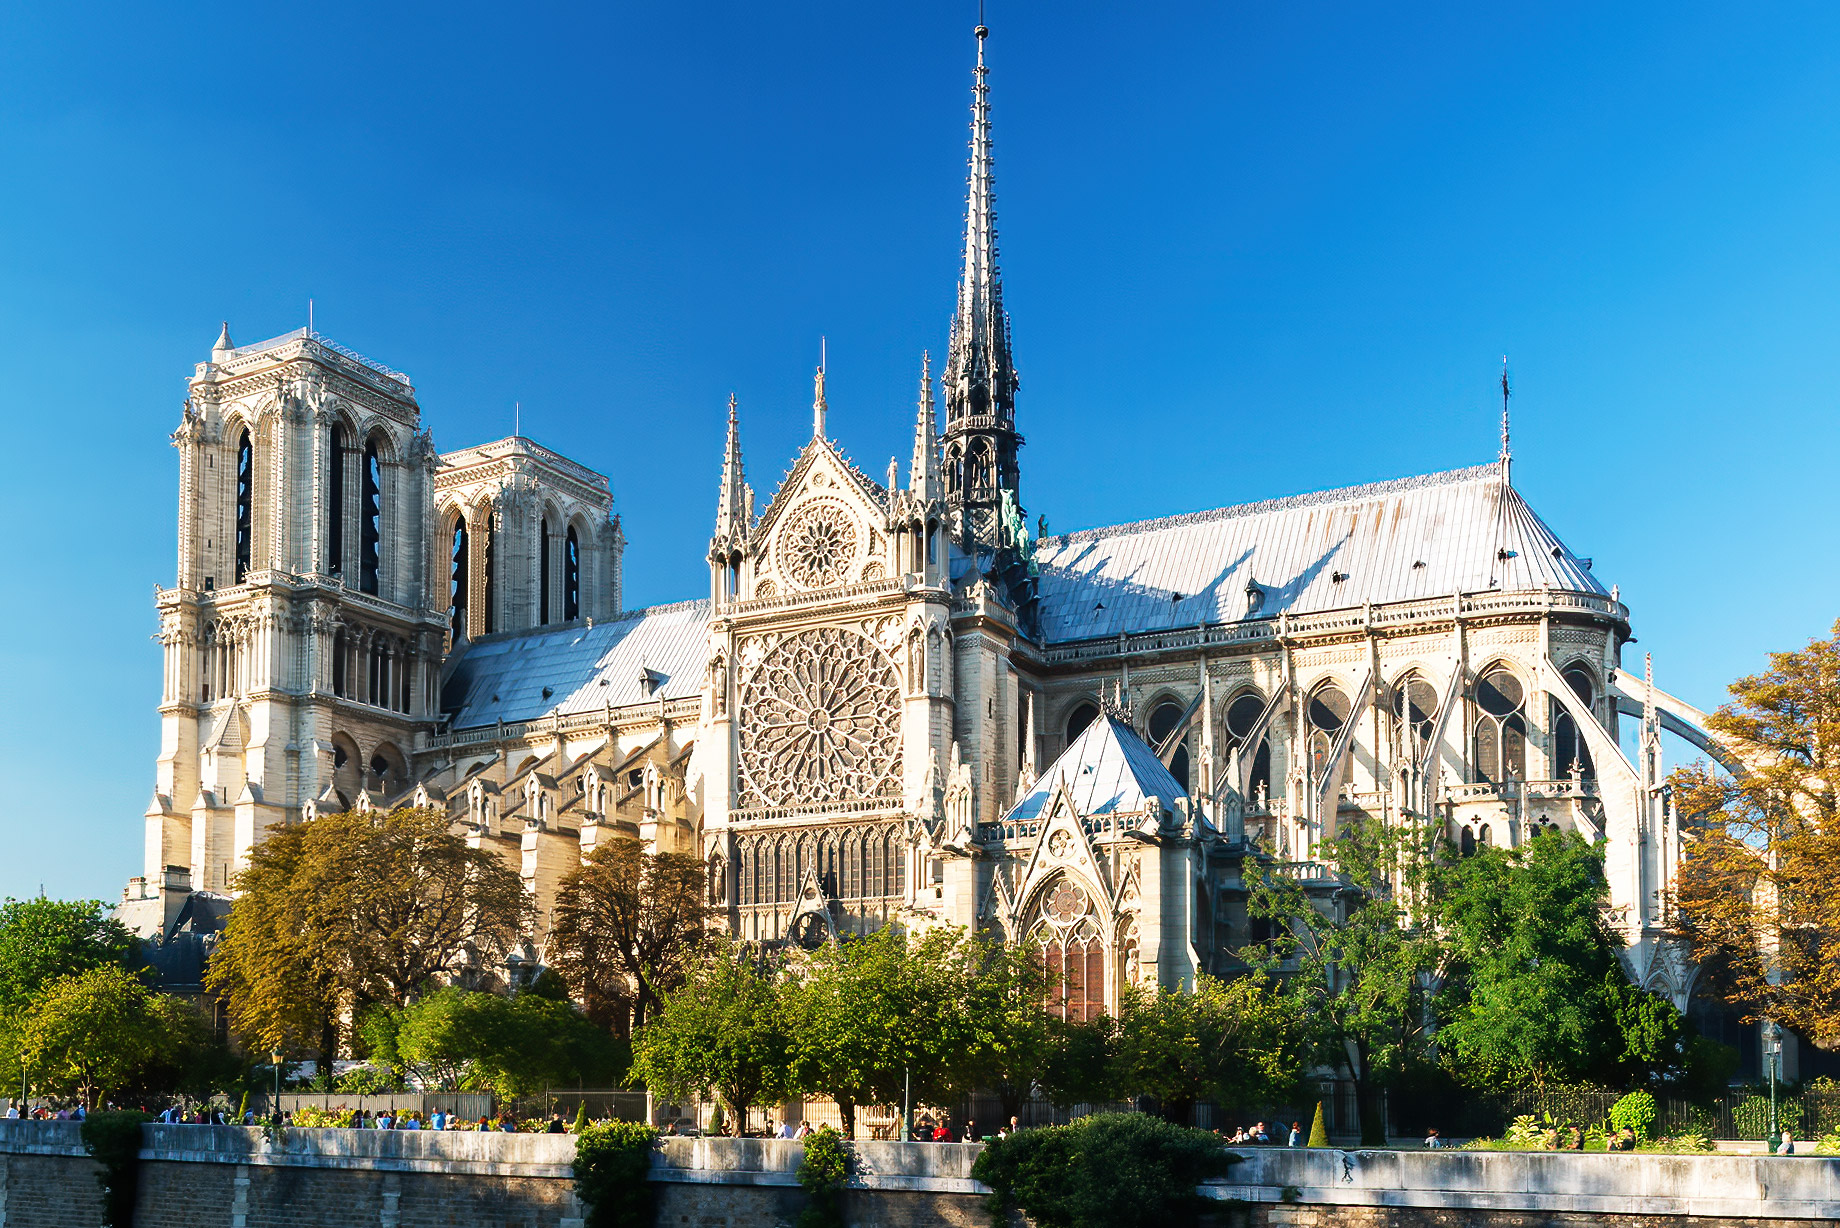 Notre Dame Cathedral - Paris, France